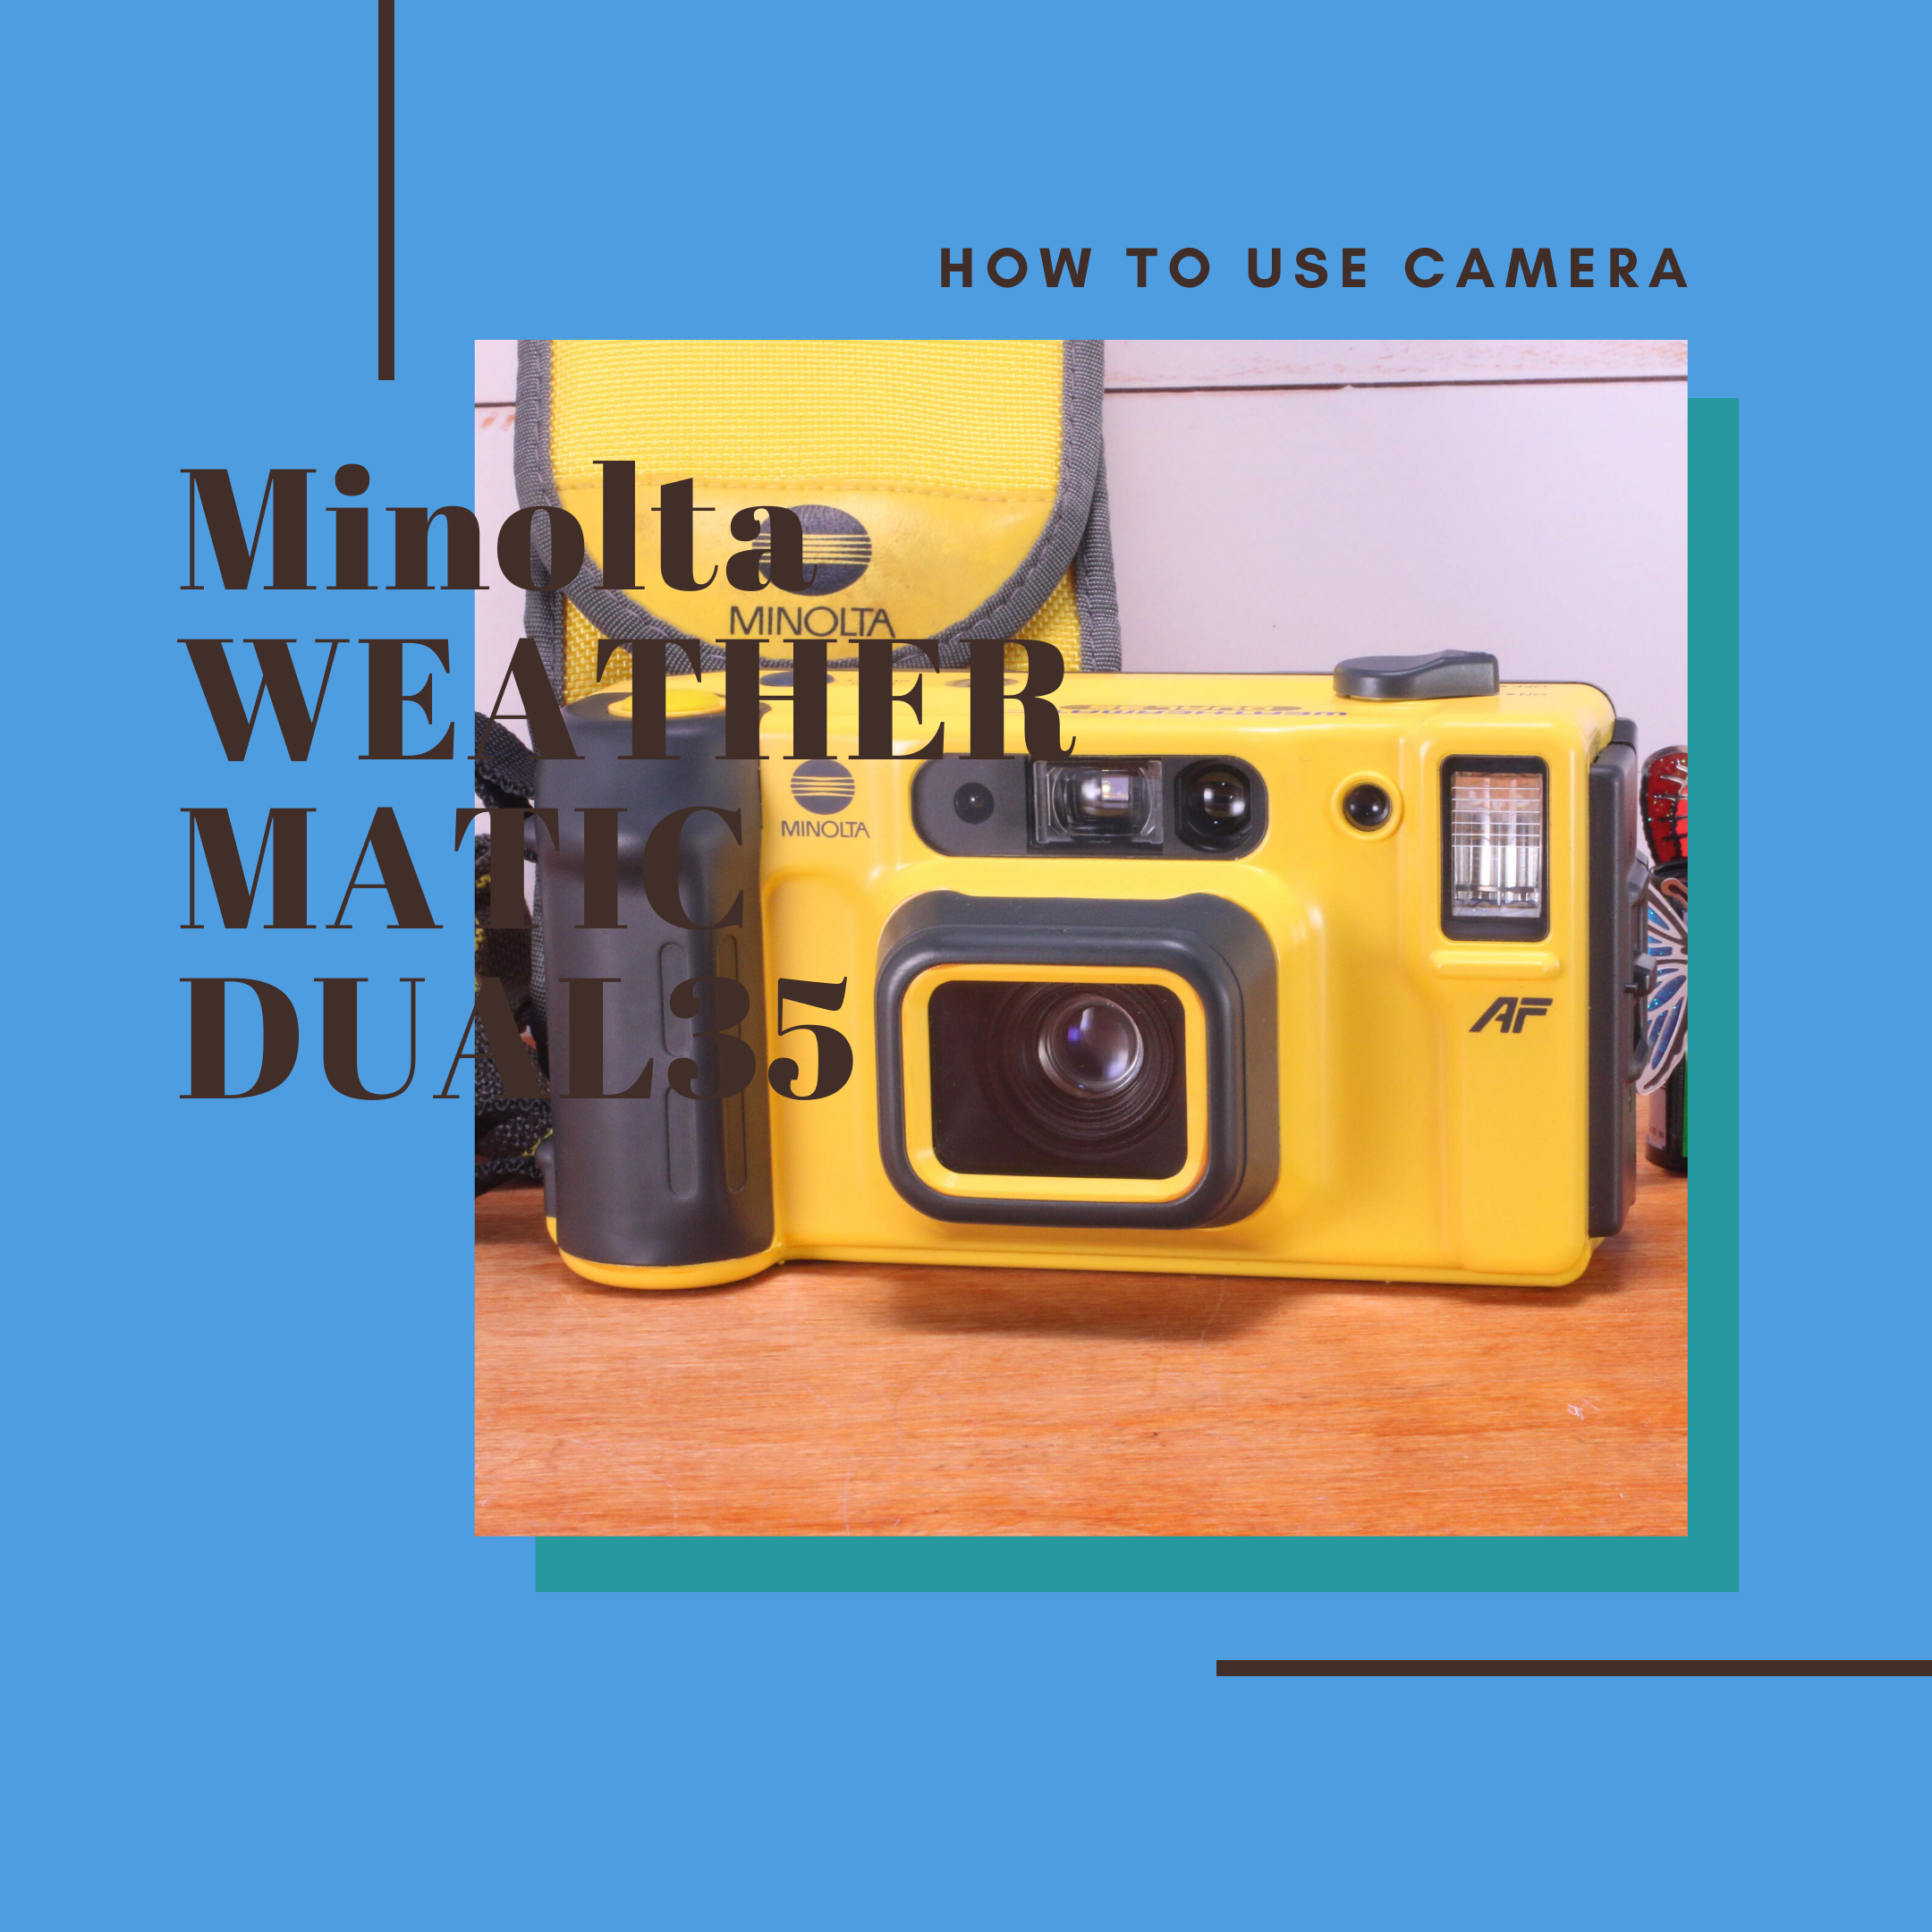 Minolta WEATHERMATIC DUAL35 の使い方 | Totte Me Camera